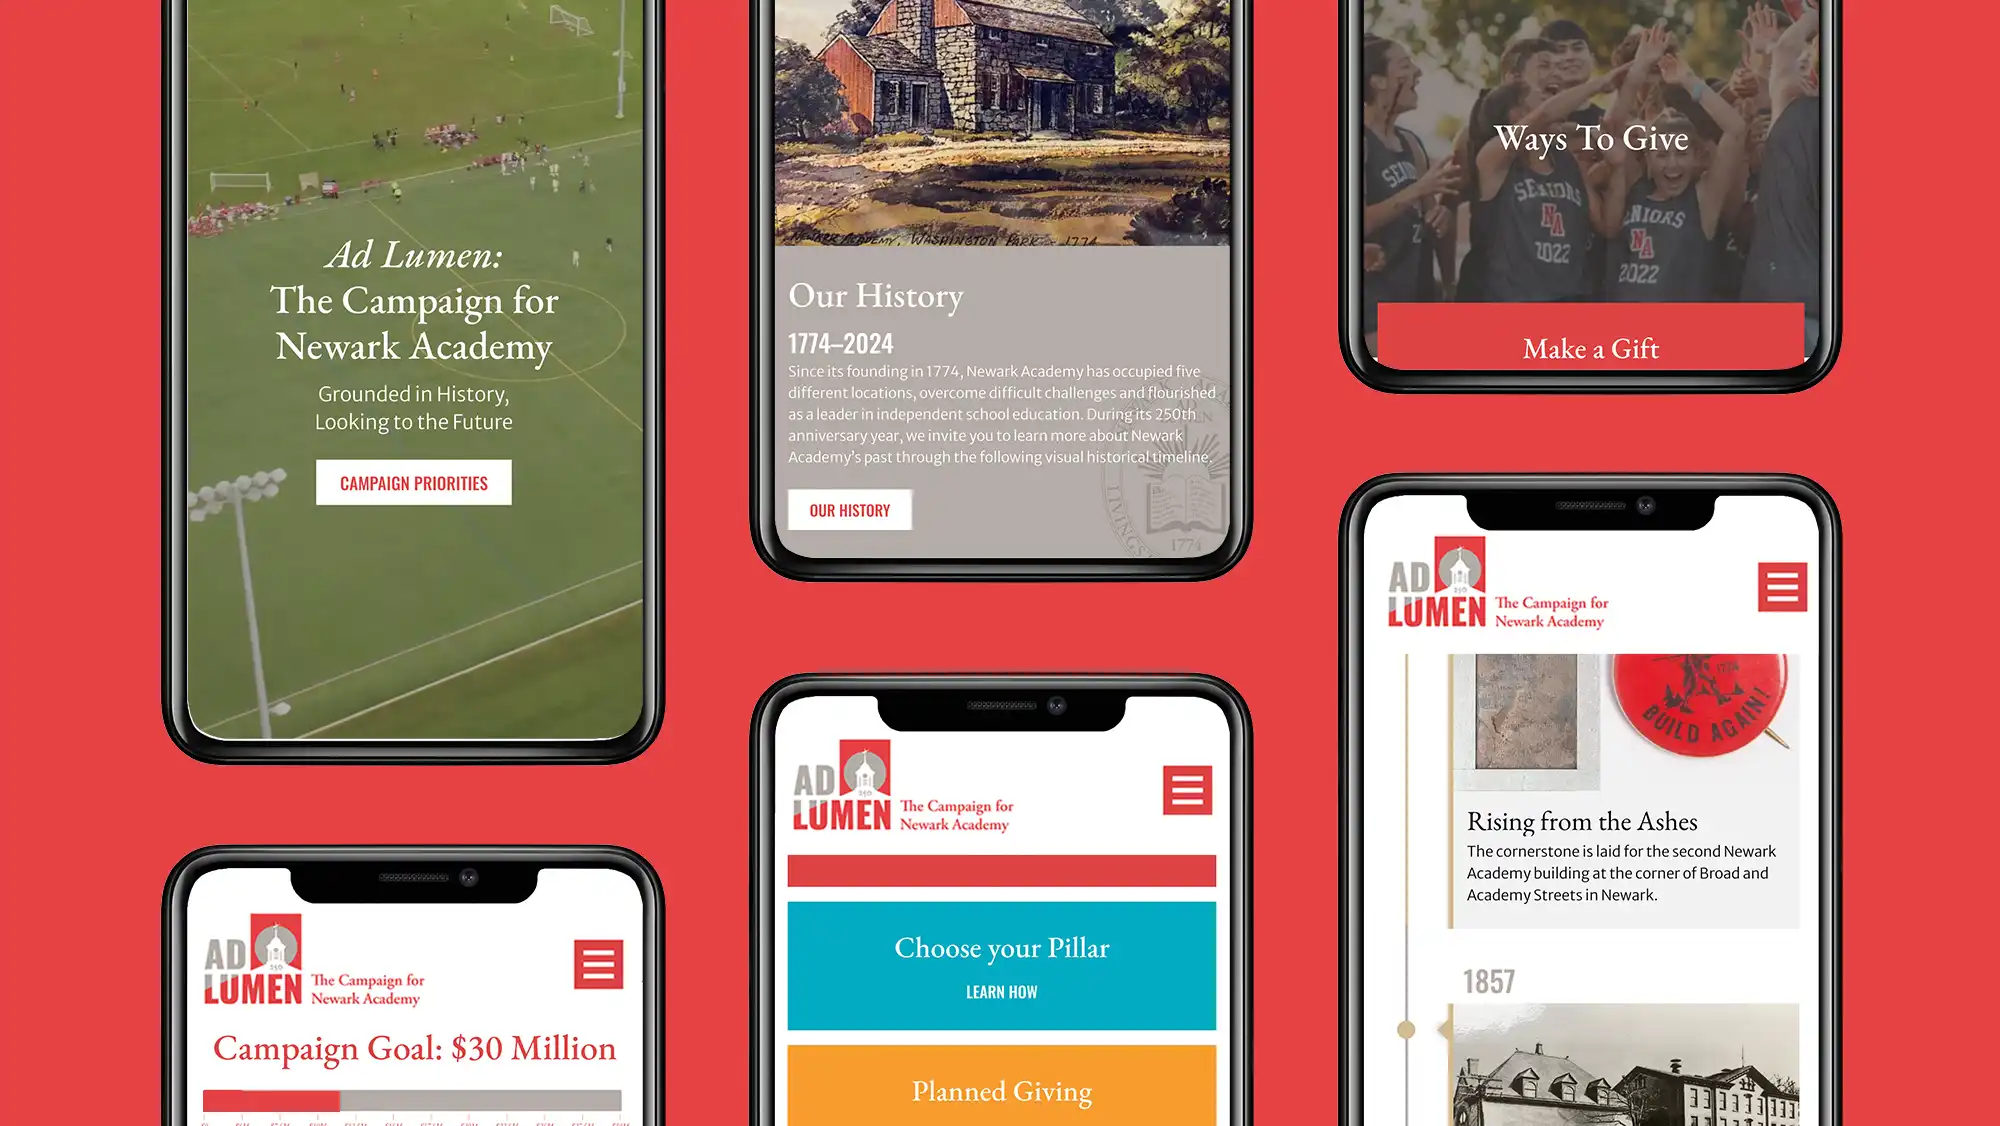 Newark Academy institution website design showing 6 phones with the mobile website design